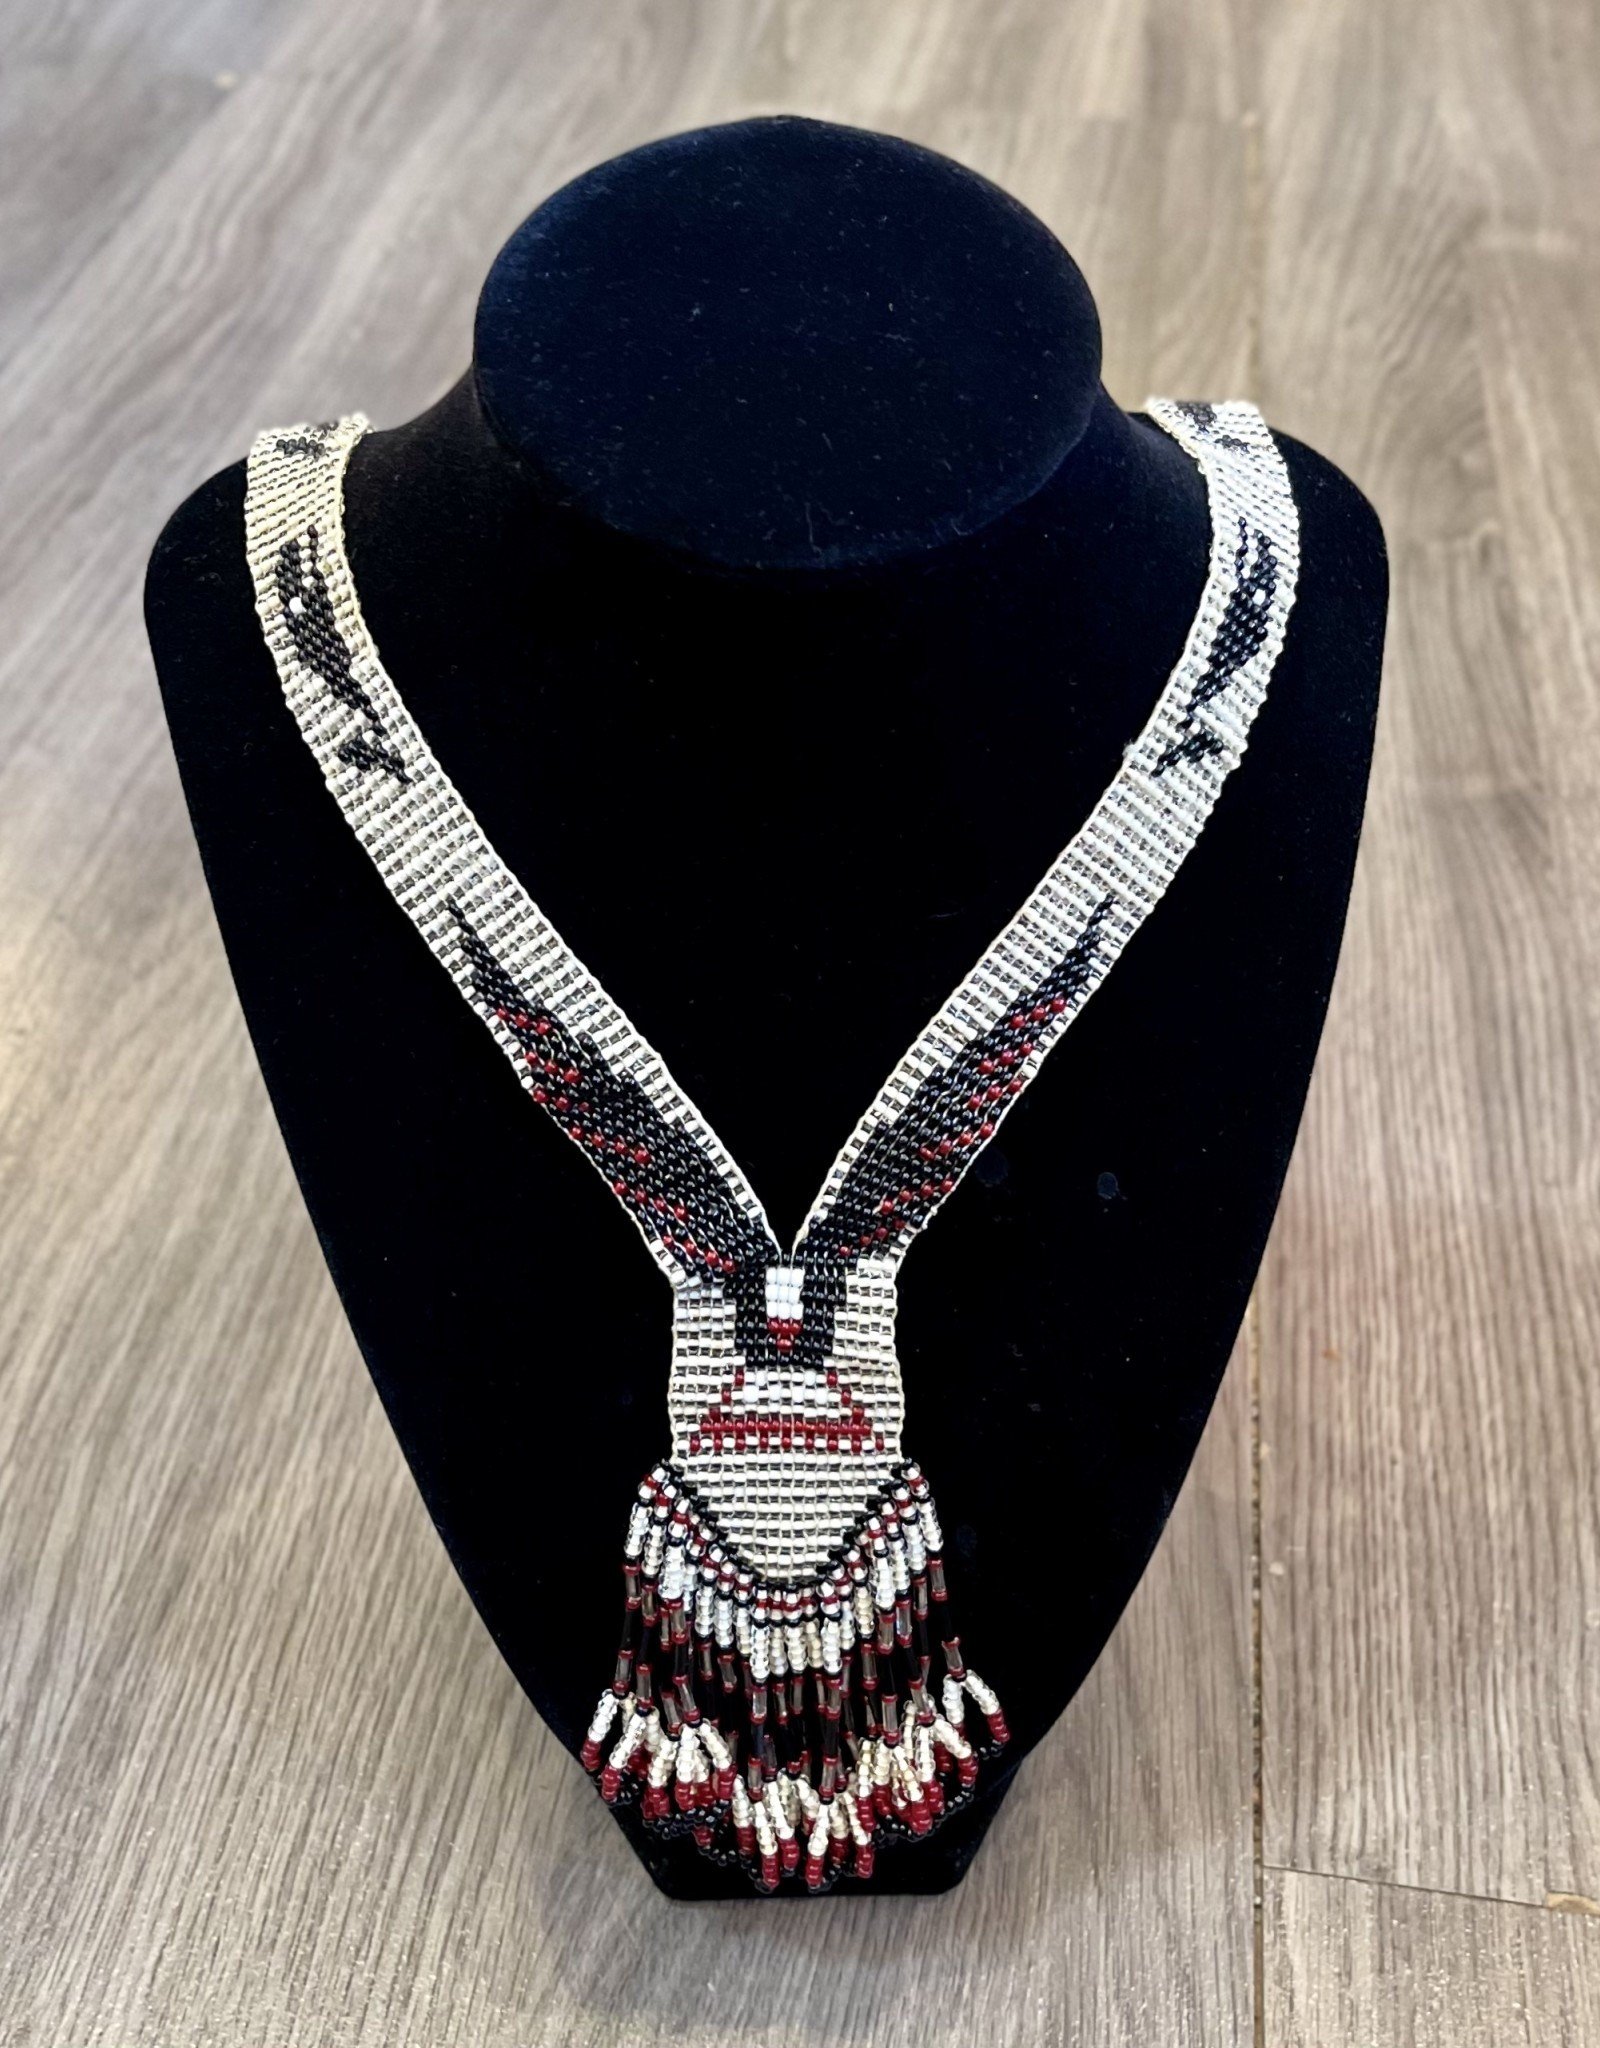 Aboriginal - Aboriginal Beaded Necklace with Eagle and Orcas